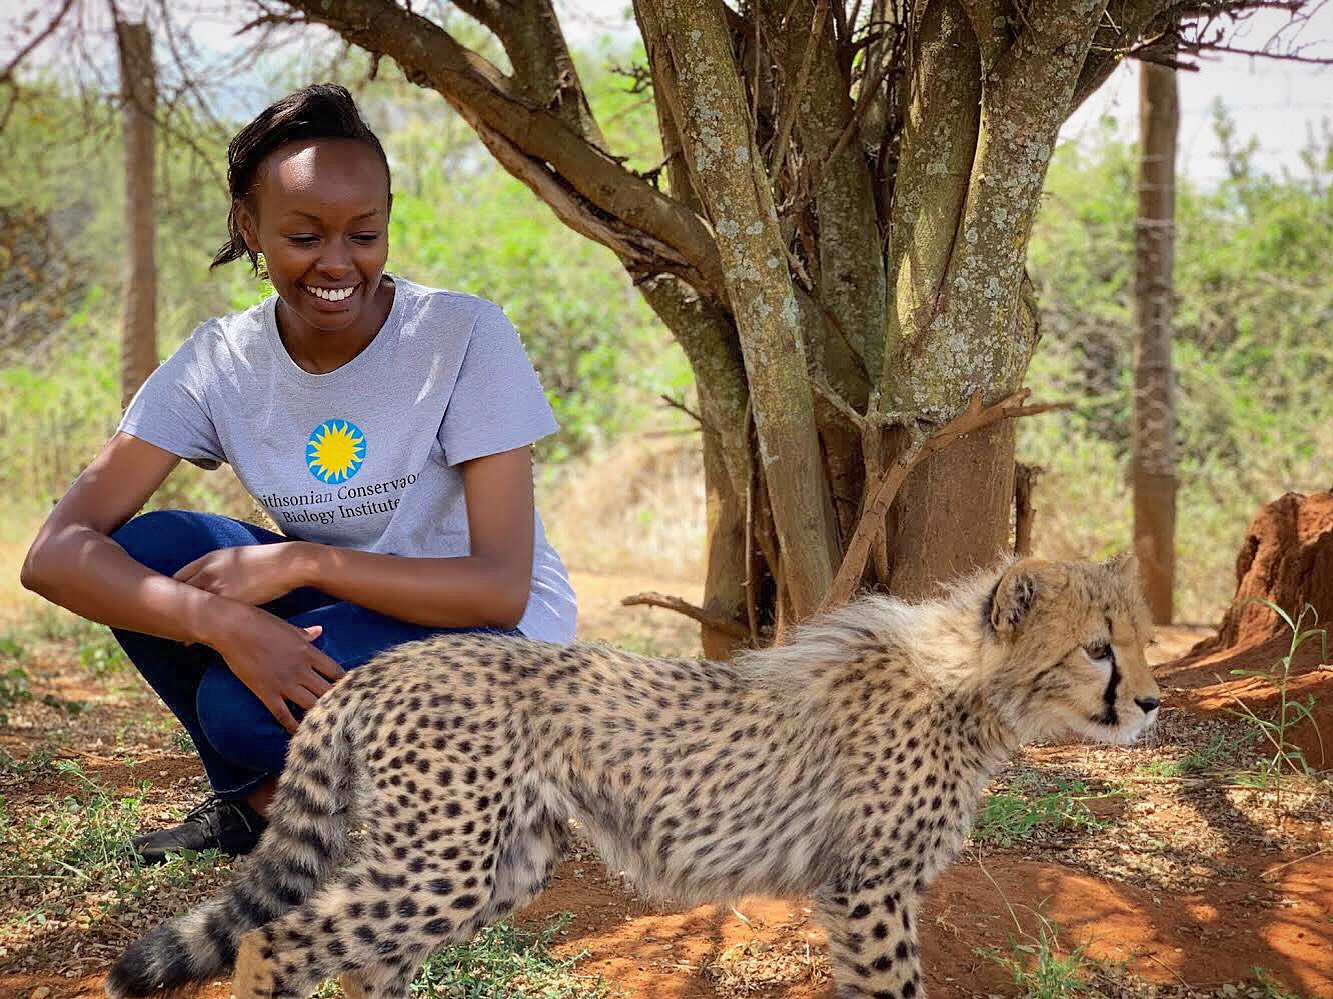 A Global Health Program veterinary fellow kneels near a young cheetah